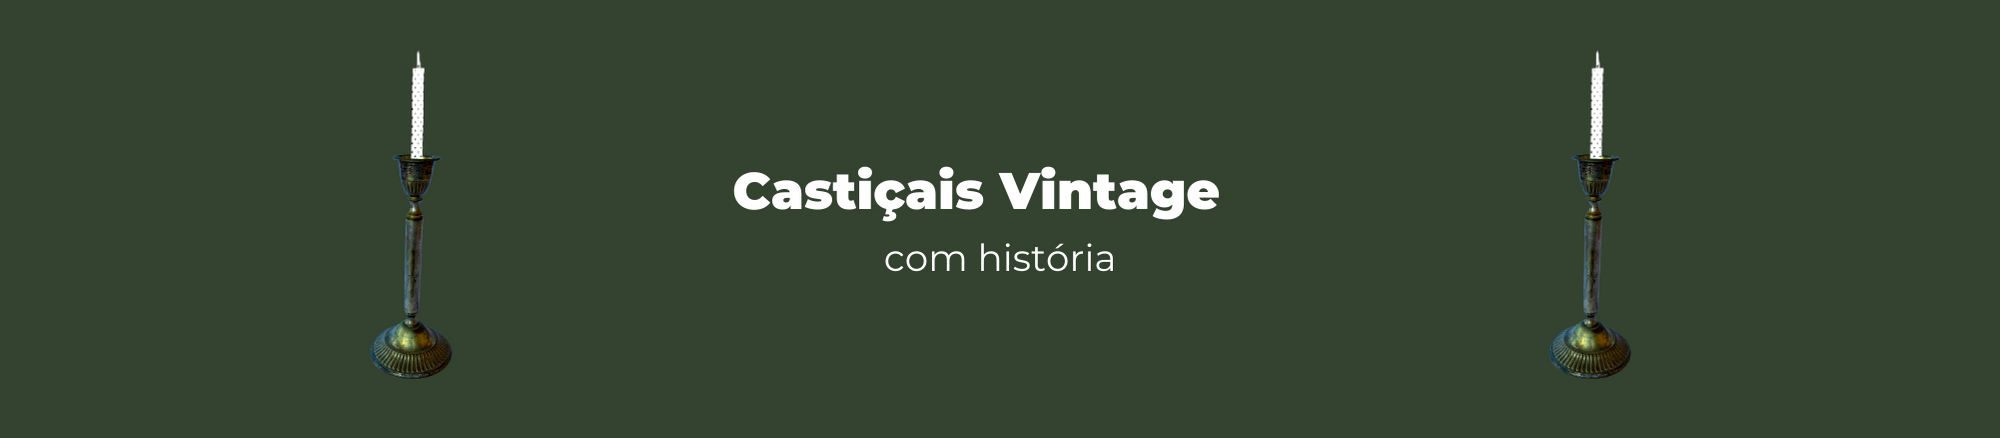 Castiçais vintage